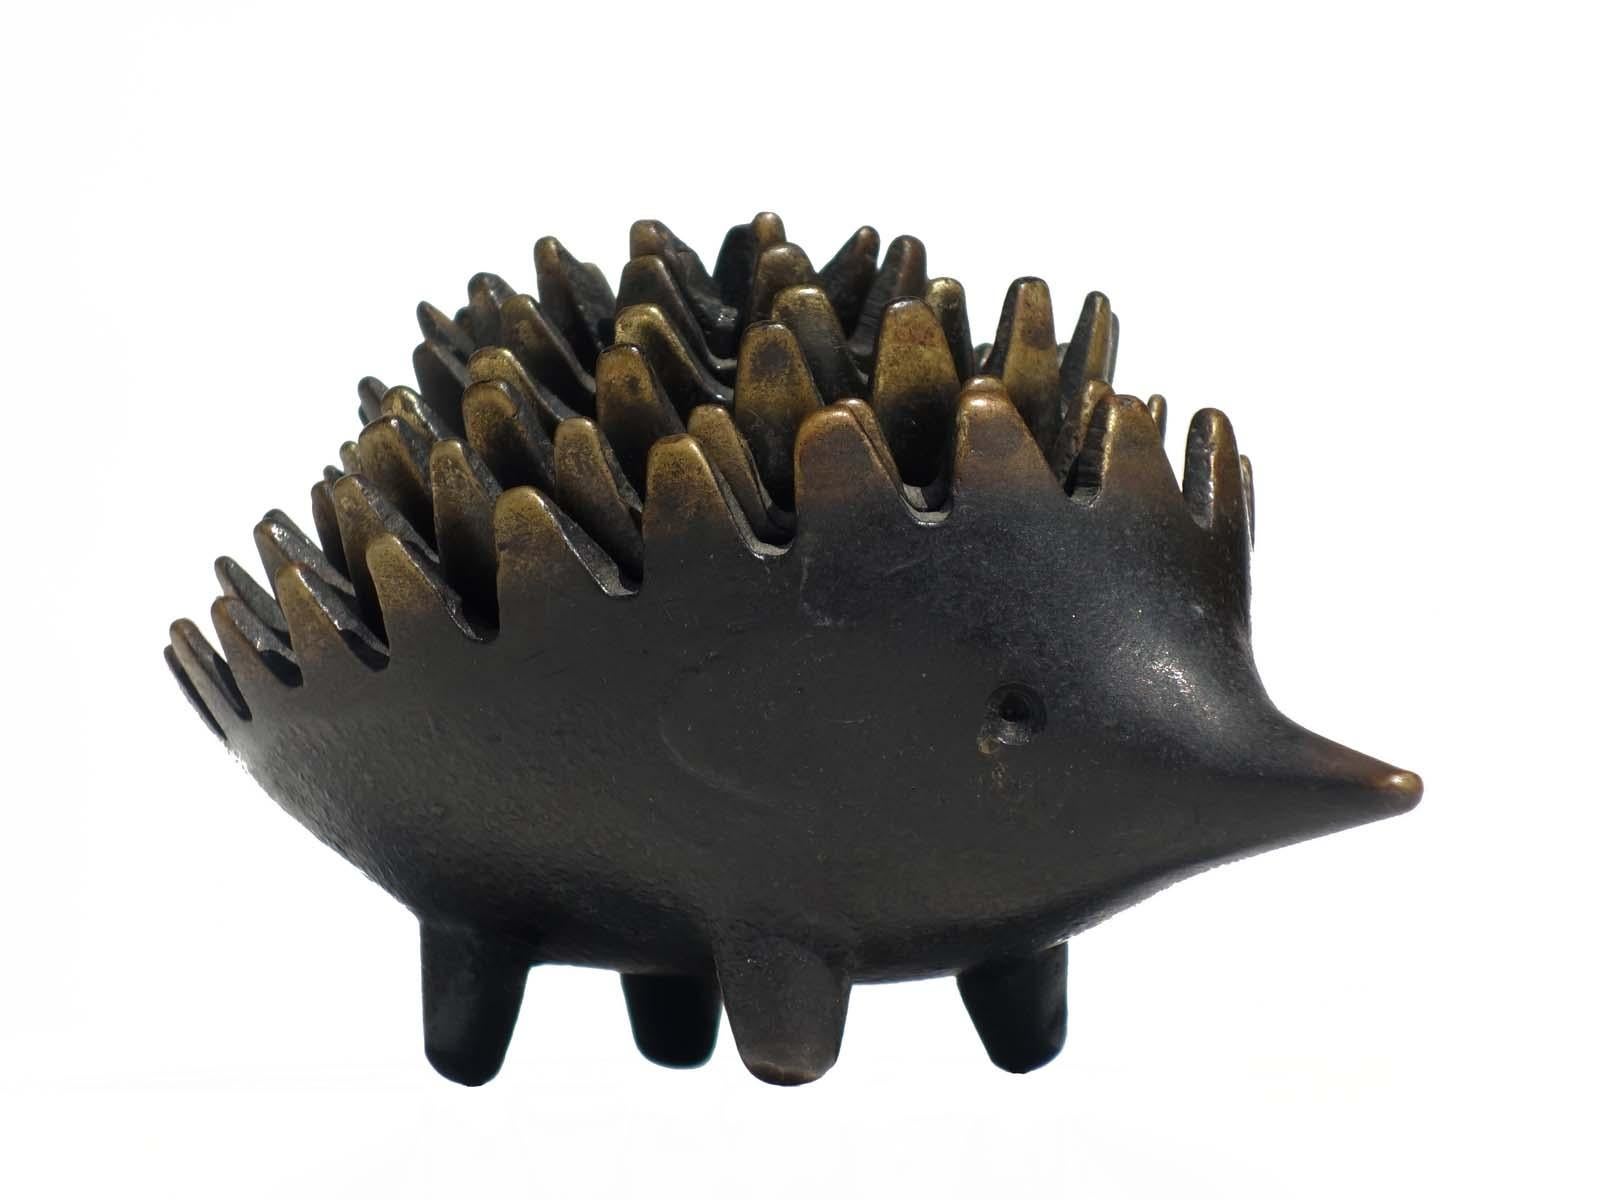 A complete set of six vintage stackable hedgehog ashtrays
Excellent condition.